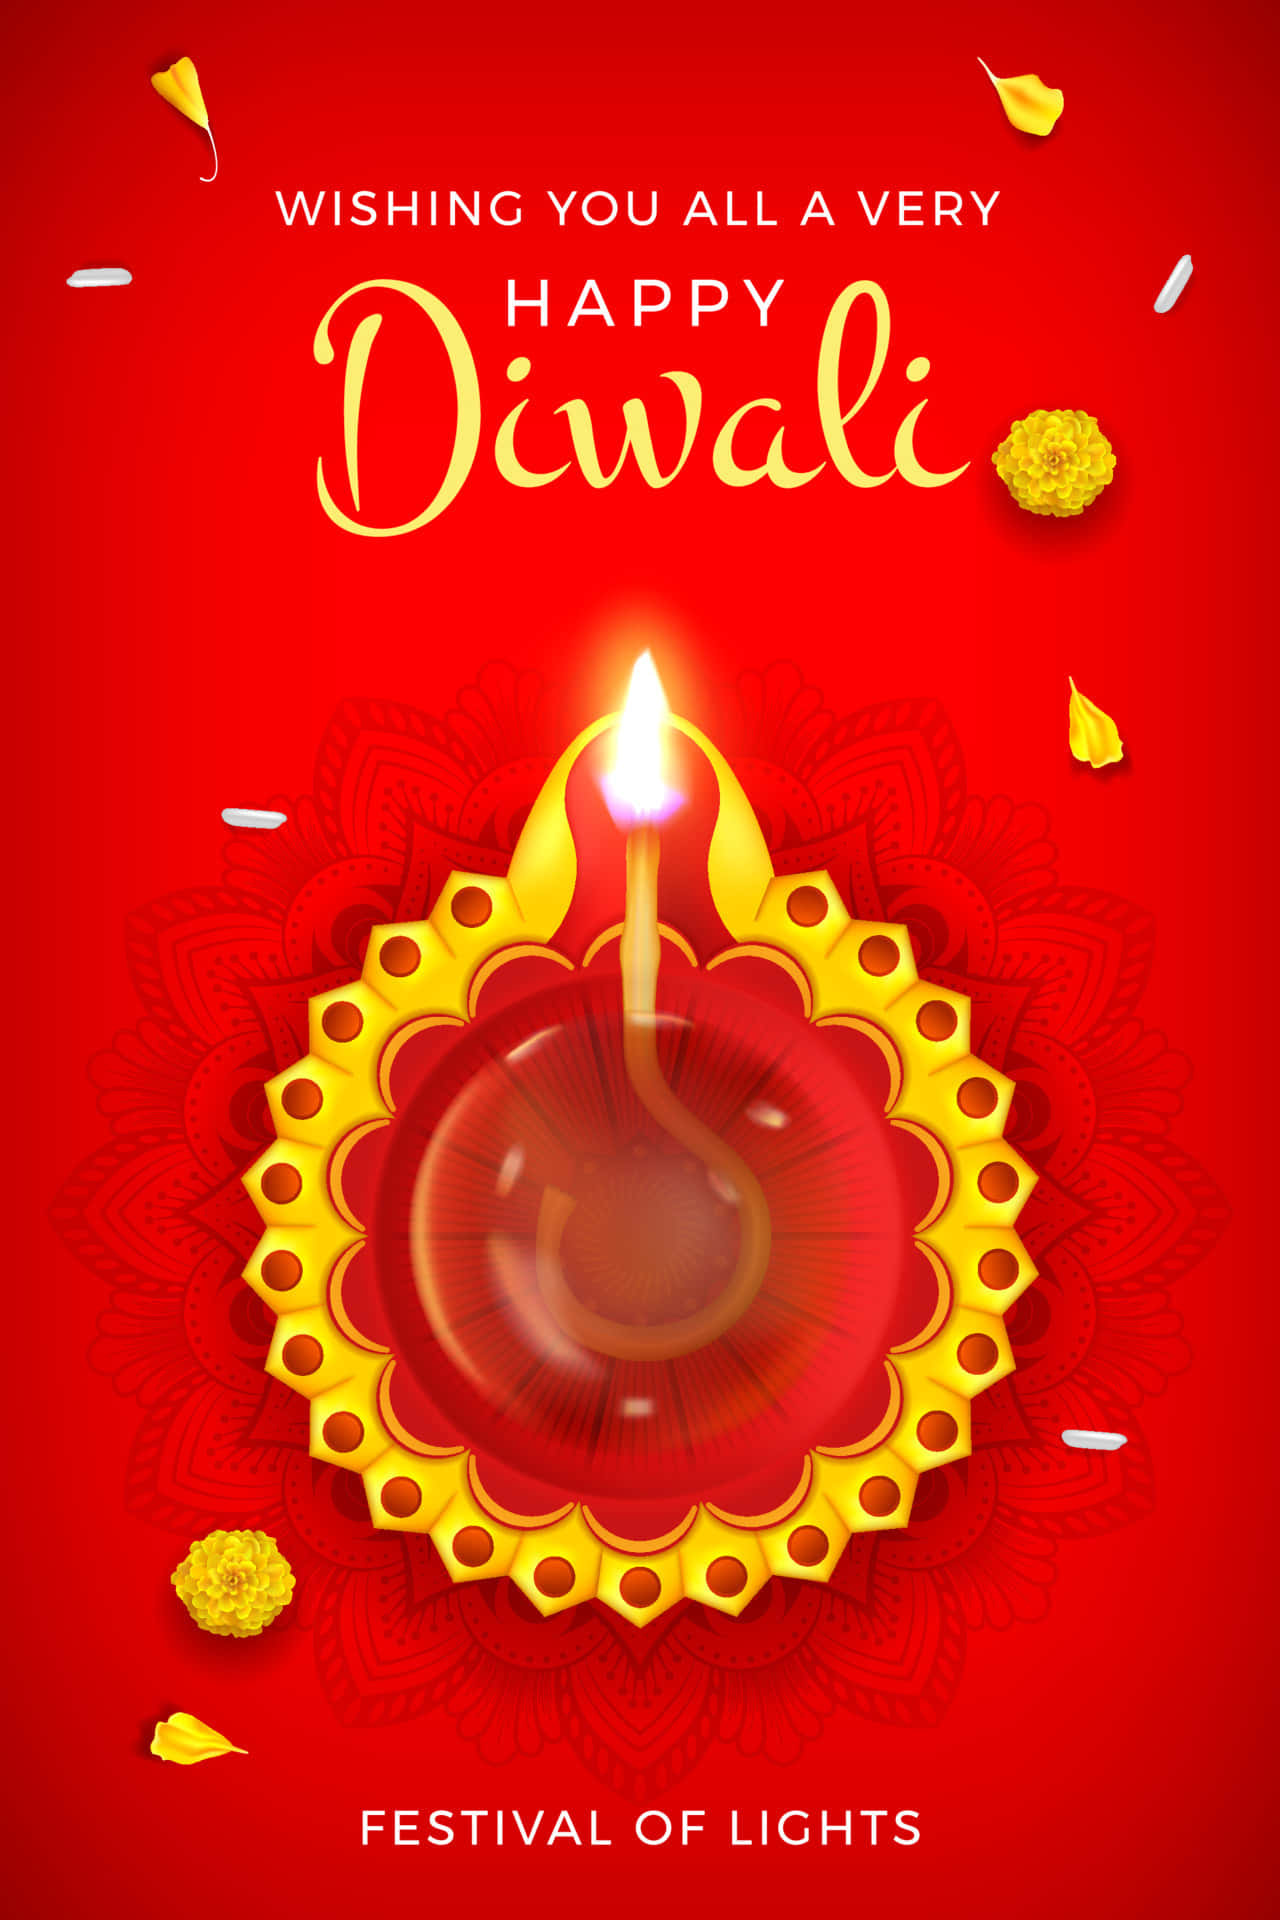 Happy Diwali Festival Of Lights Greeting Card